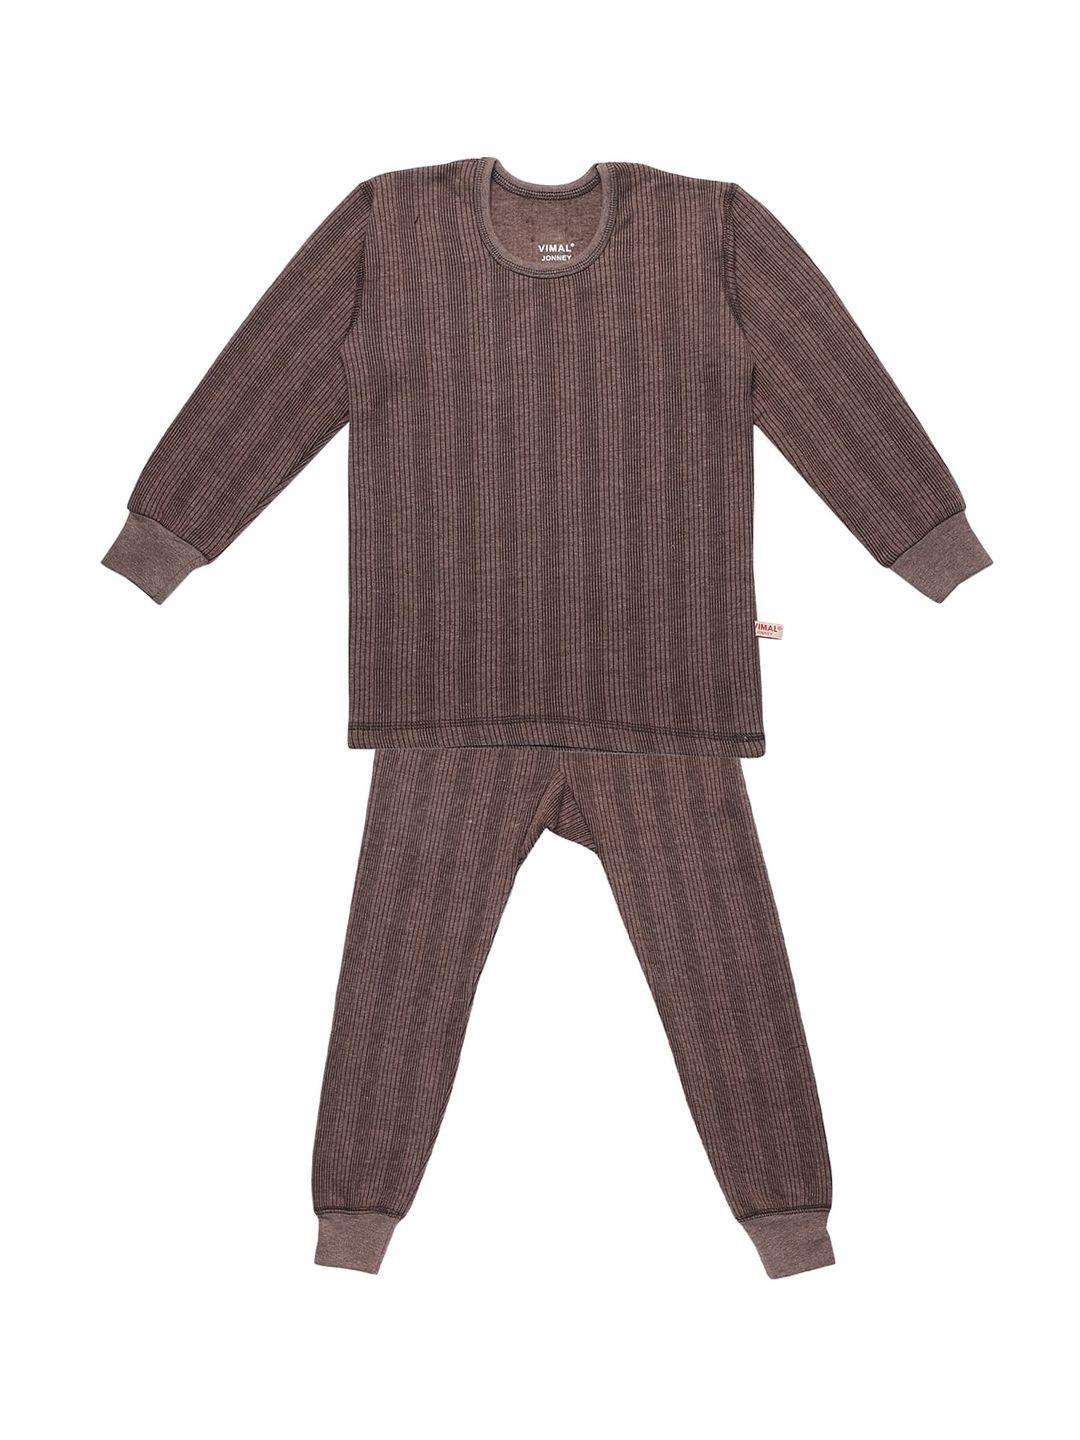 vimal-jonney--kids-self-striped-cotton-thermal-sets